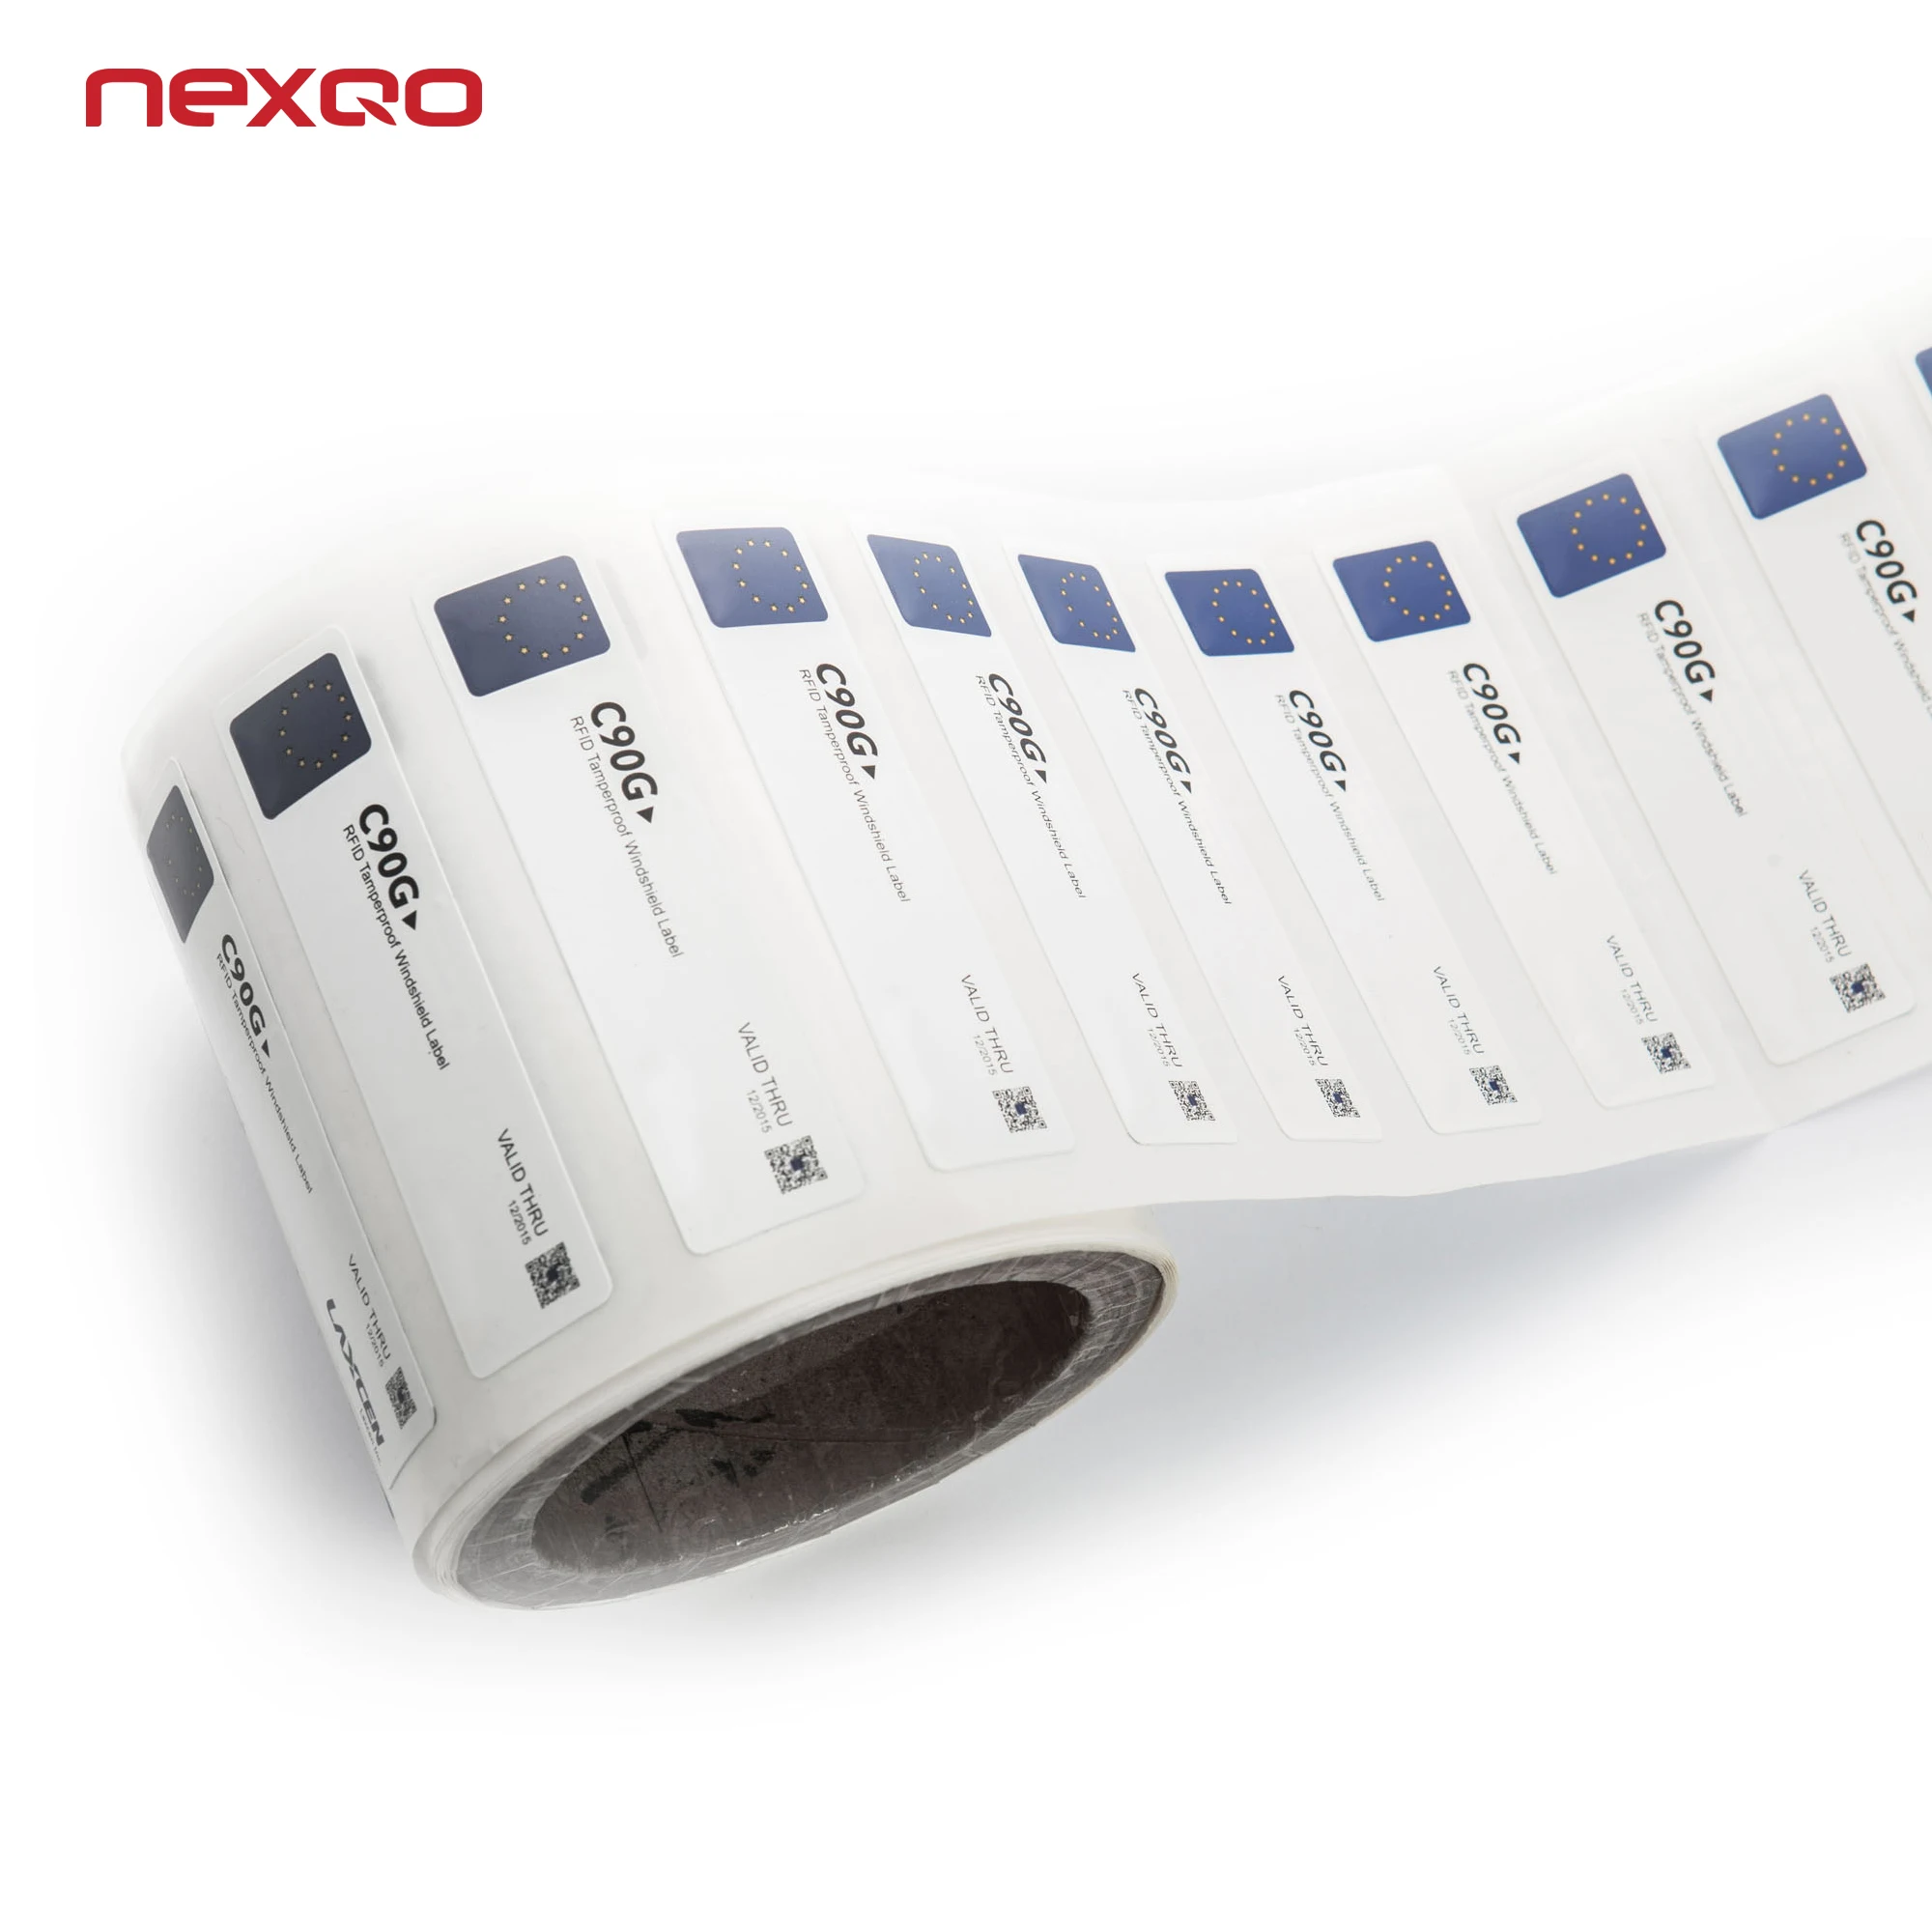 rl01-nexqo-best-price-printable-paper-smart-nfc-label-tag-uhf-rfid